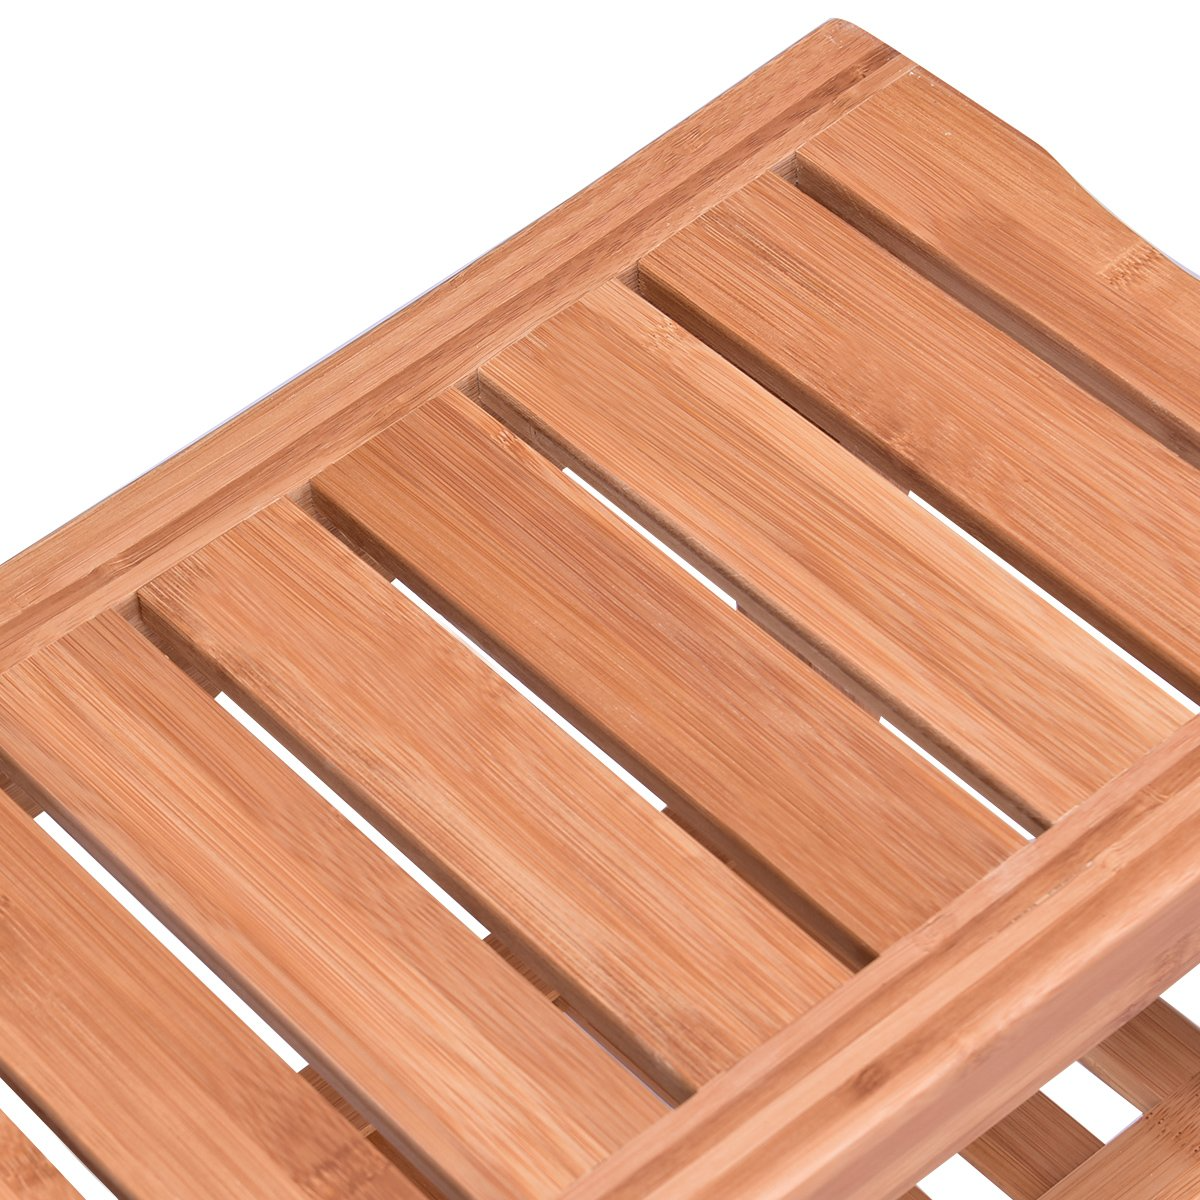 Bamboo Shower Bench Seat with Storage Shelf - Giantexus